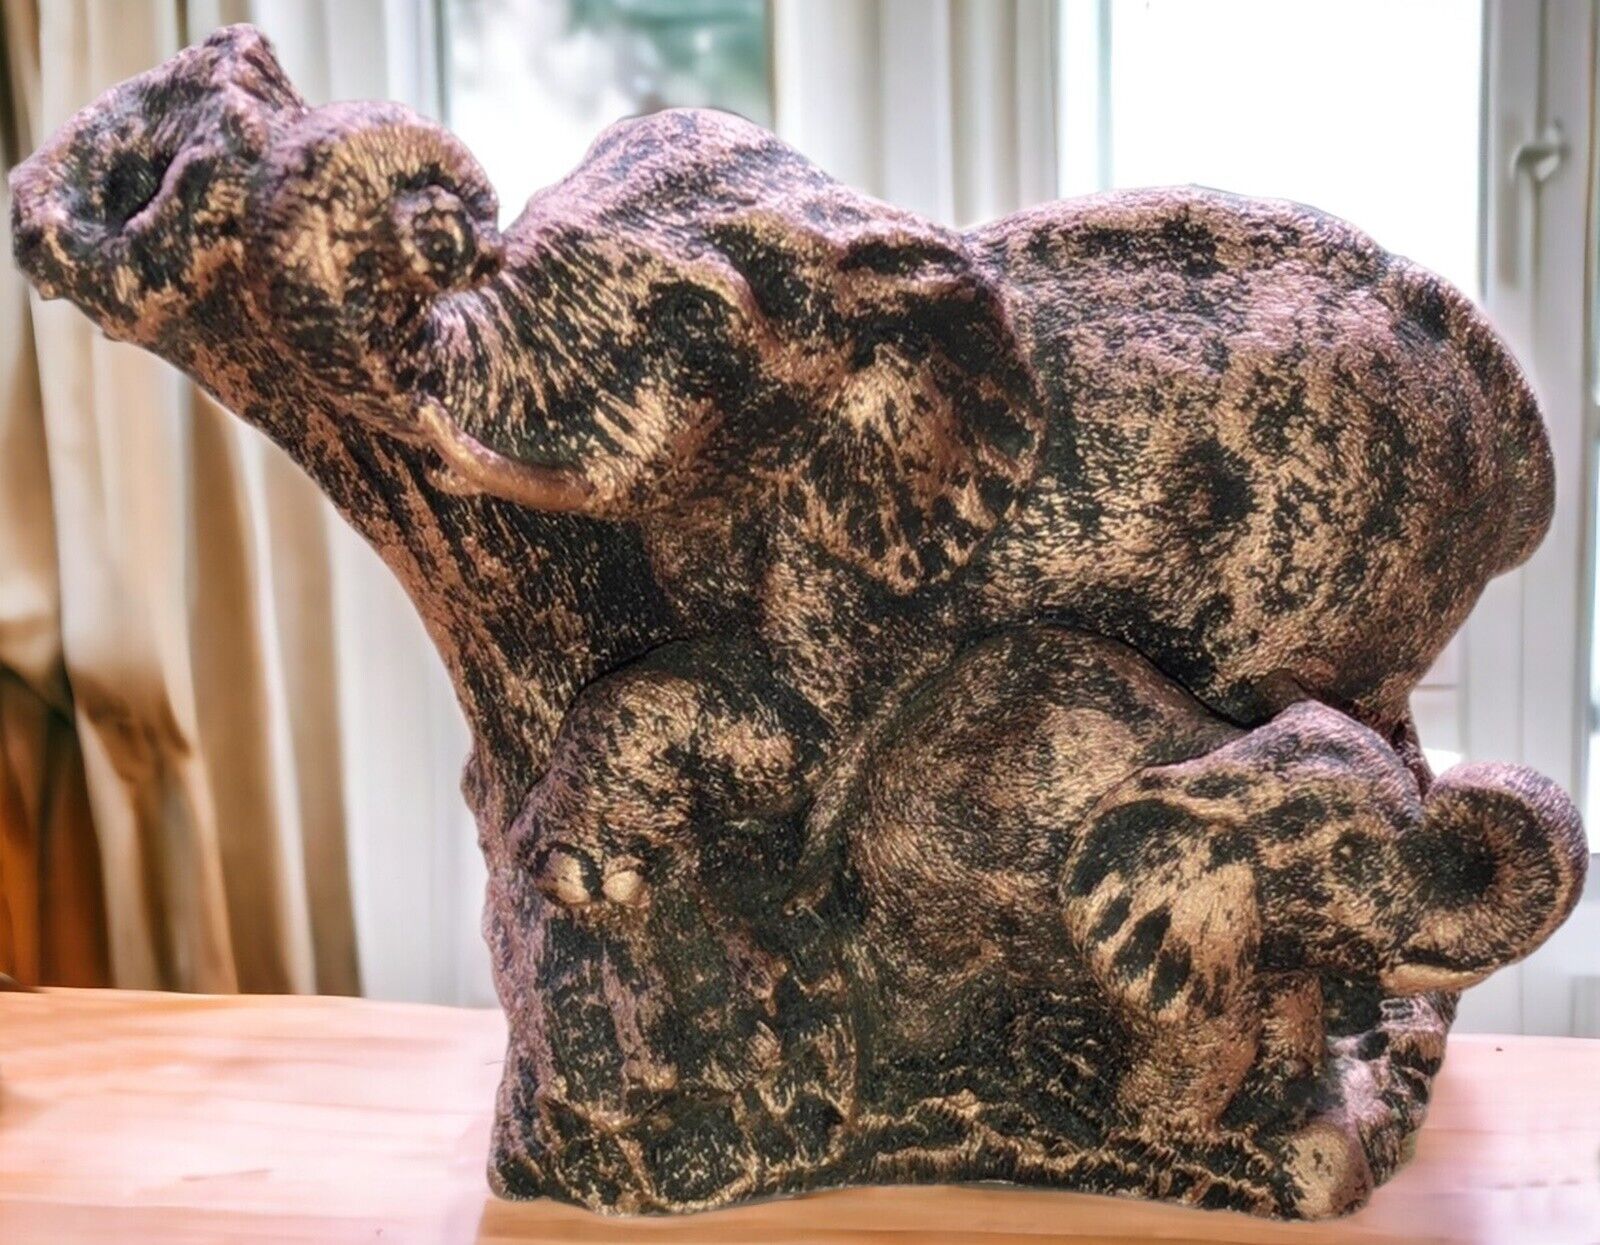 Elephant Figurine Sculpture 1.5 lb Plaster/Polystone ?